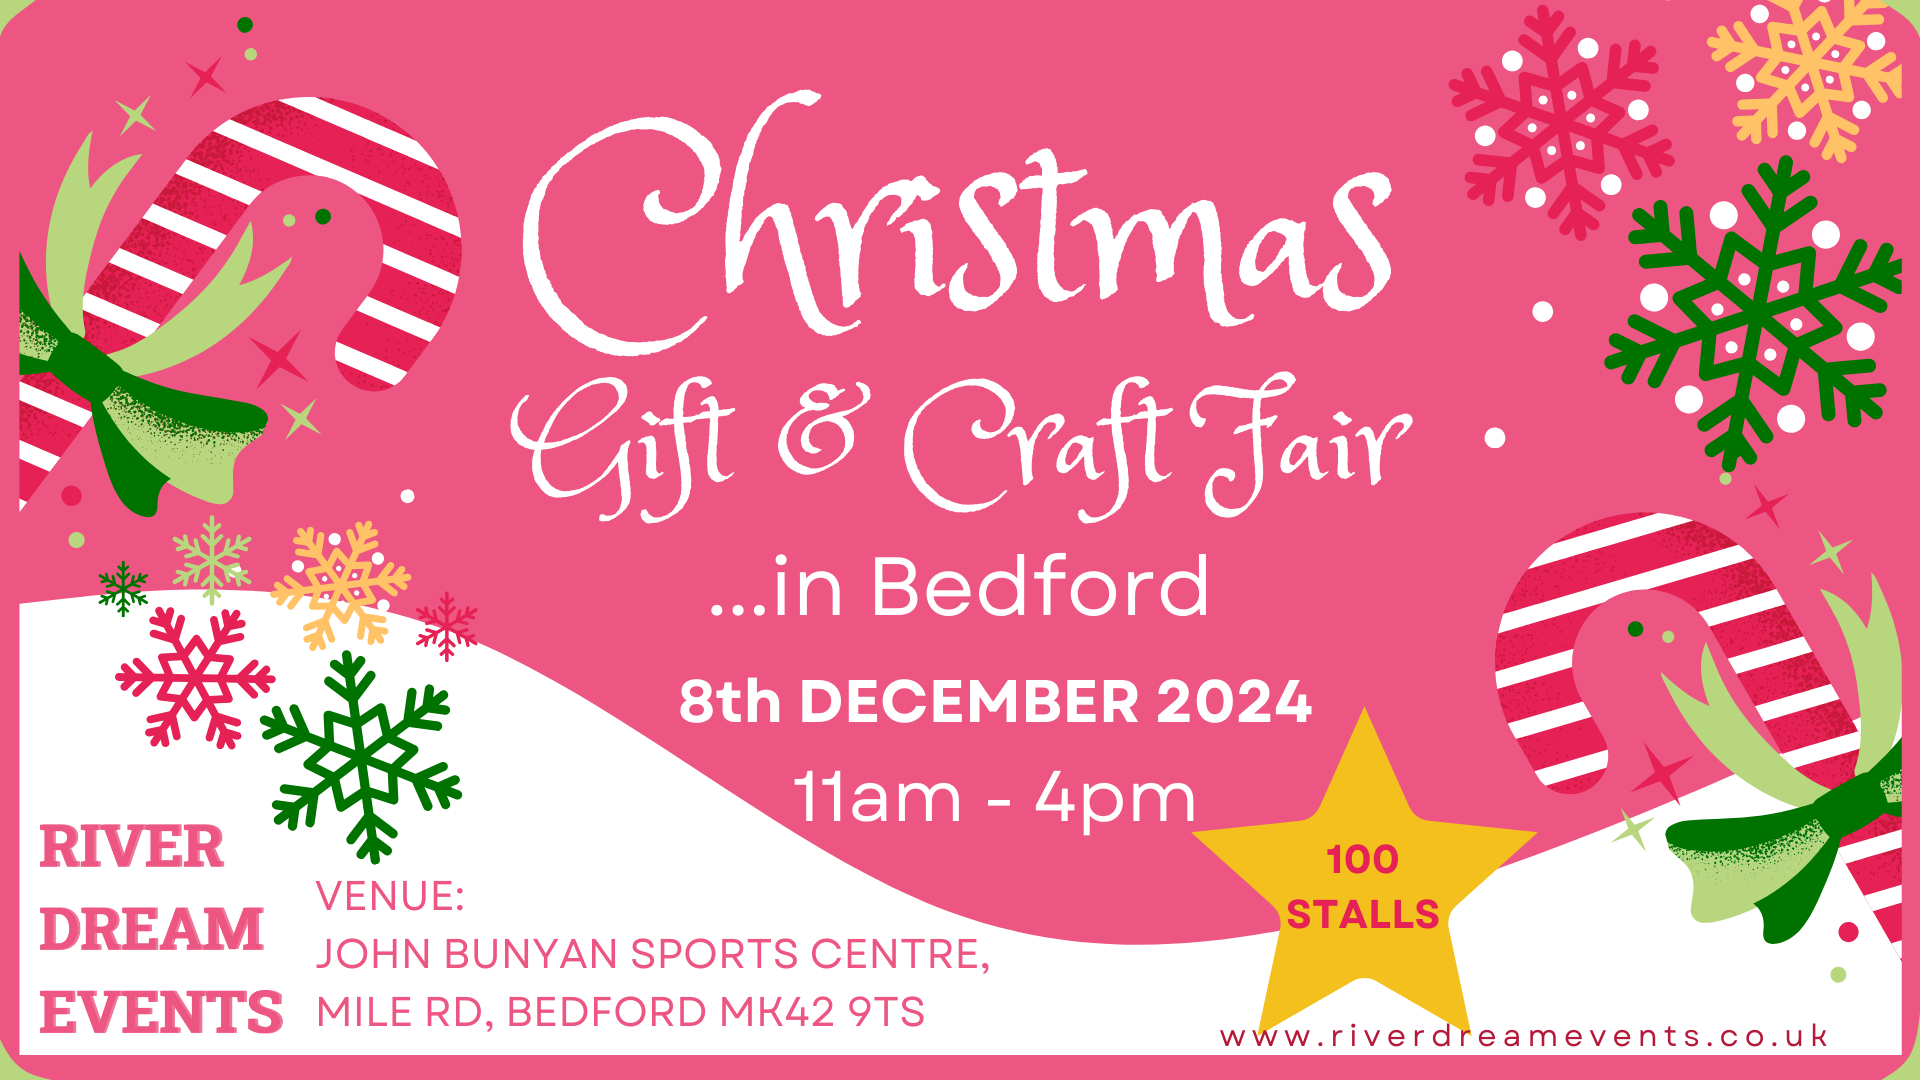 Bedford Christmas Gift & Craft Fair, 8th December 2024